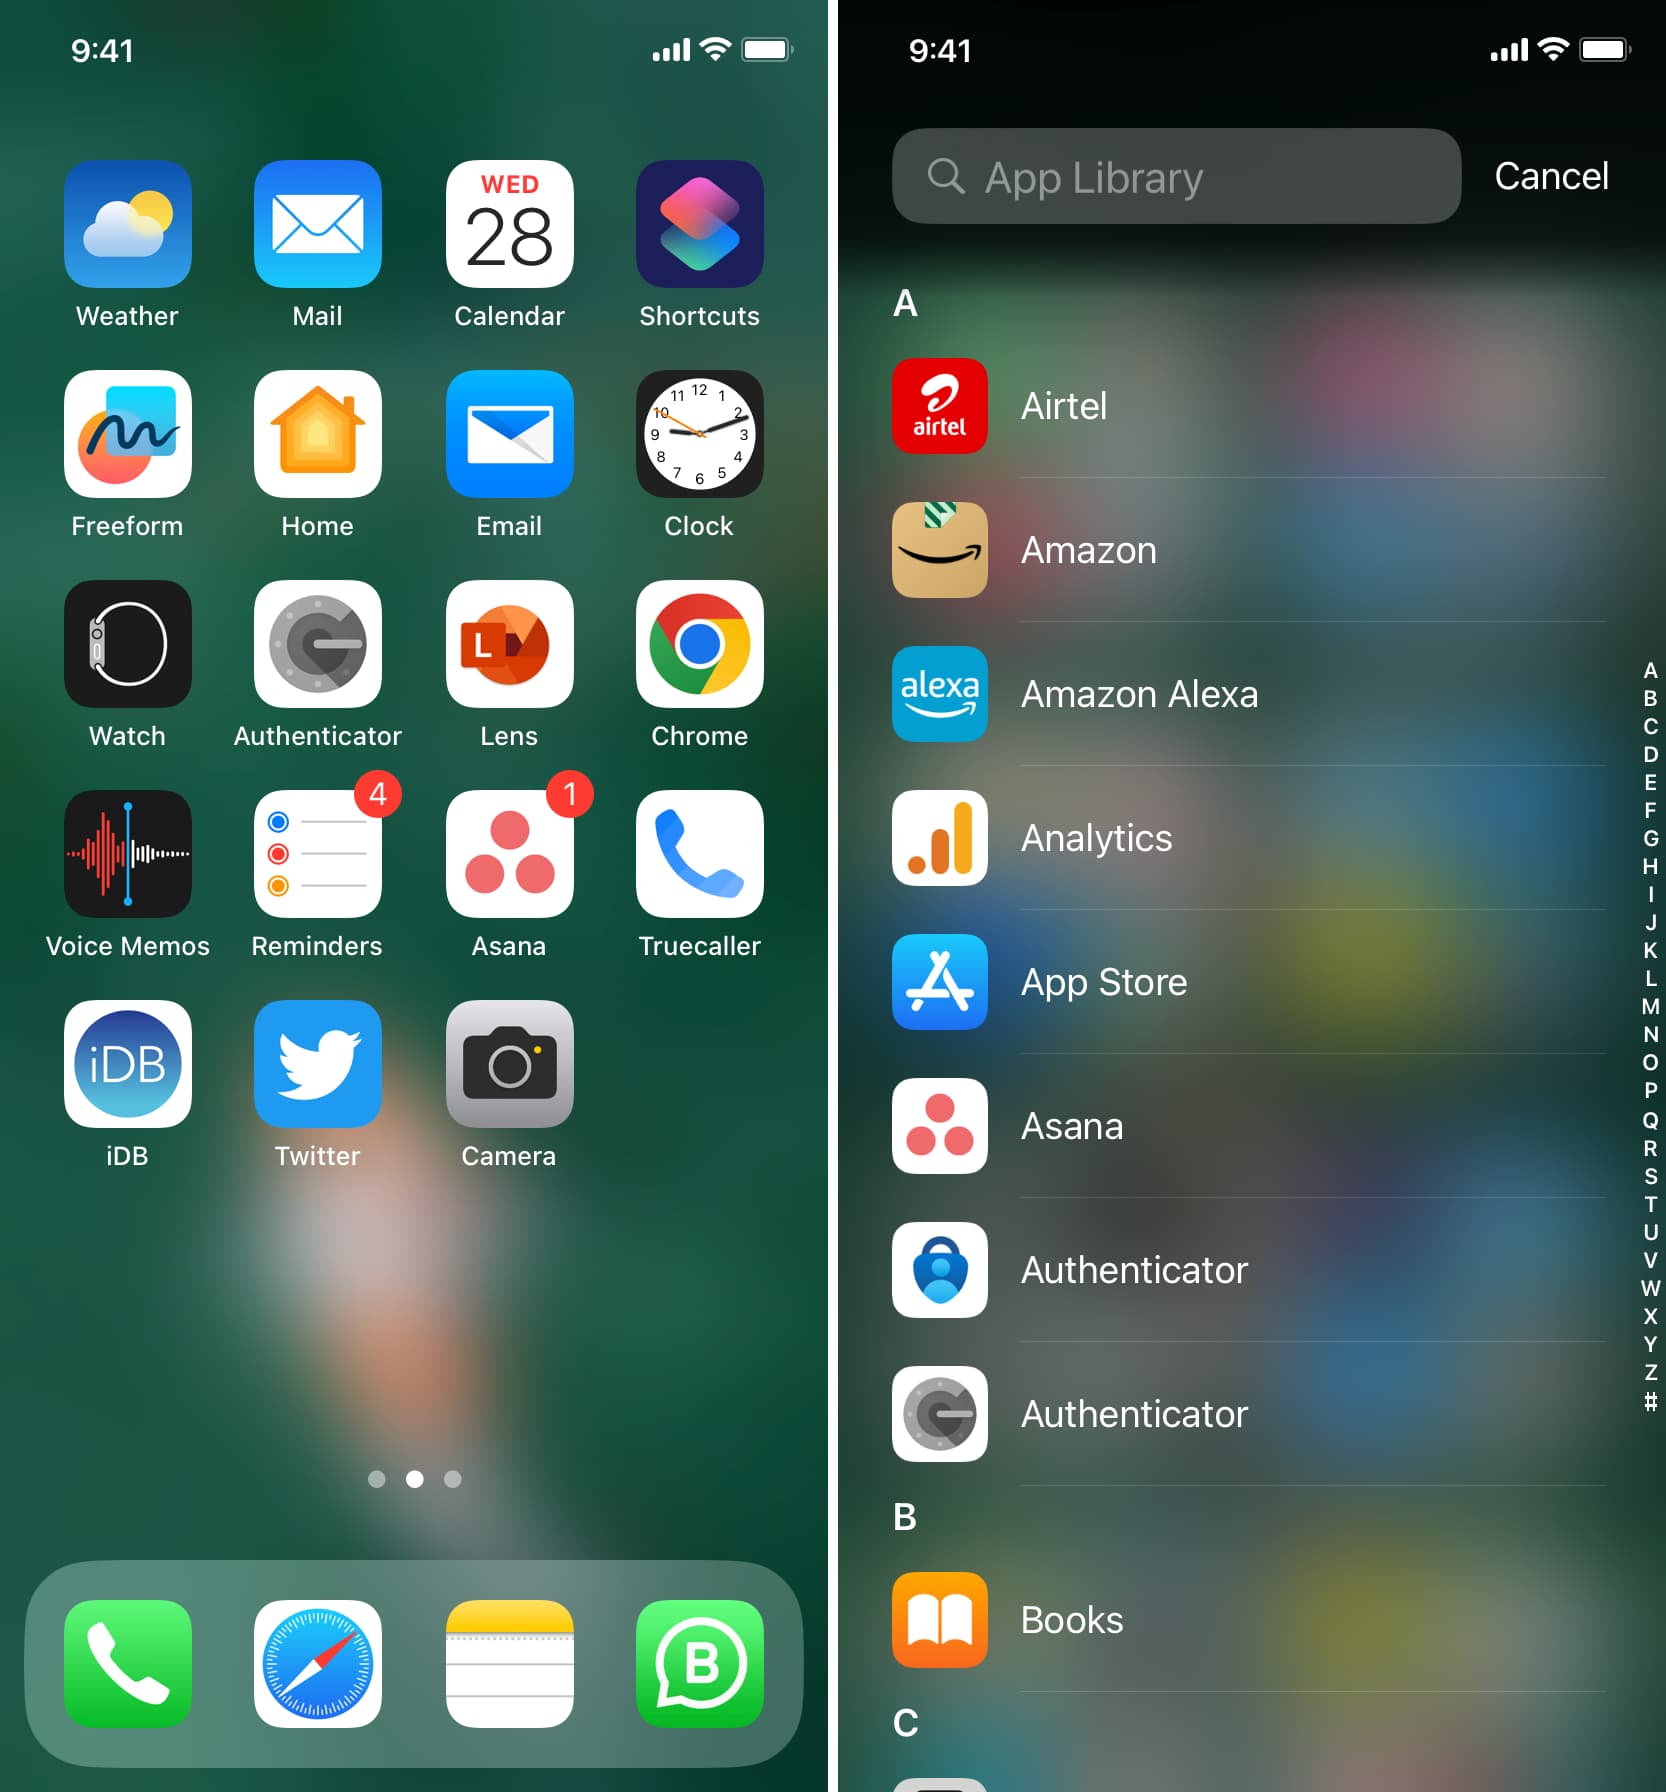 Écran d'accueil de l'iPhone et bibliothèque d'applications affichant les applications iOS